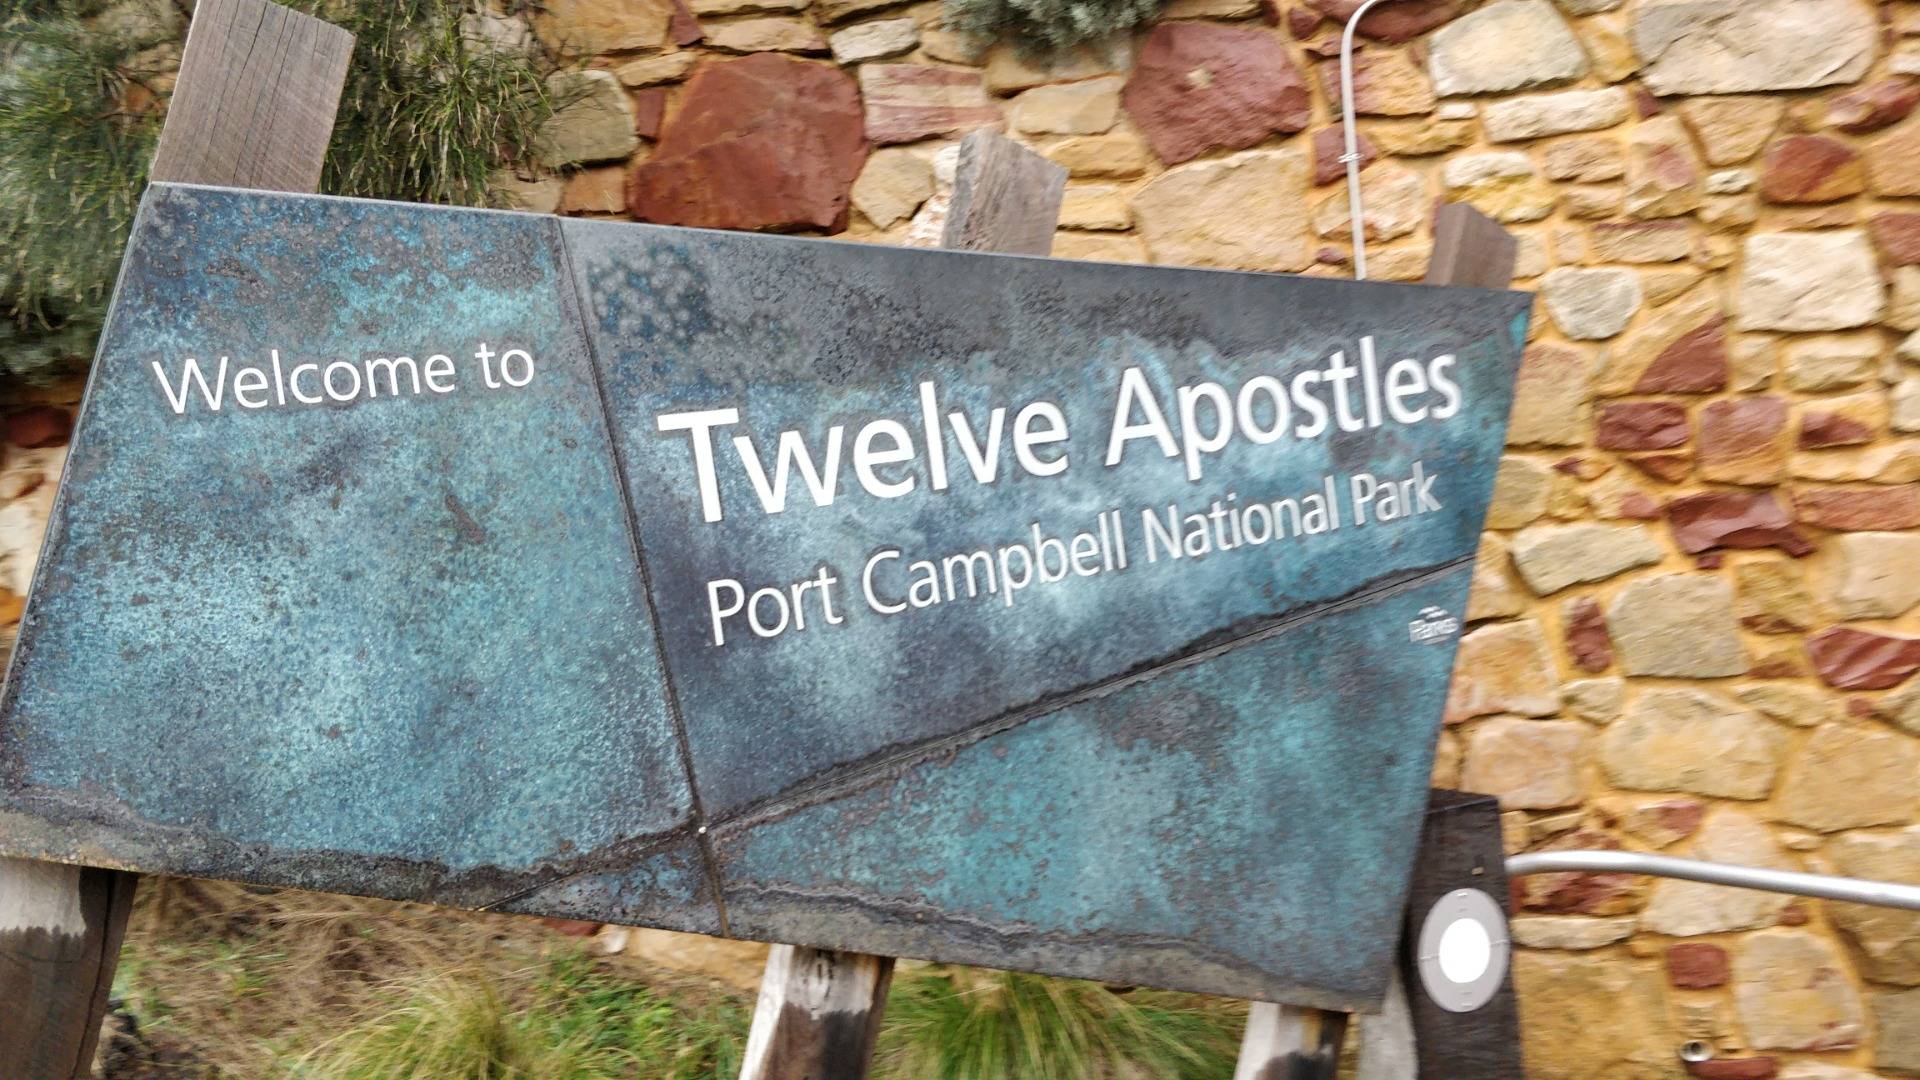 Twelve Apostles (Port Campbell National Park: AUSTRALIA)